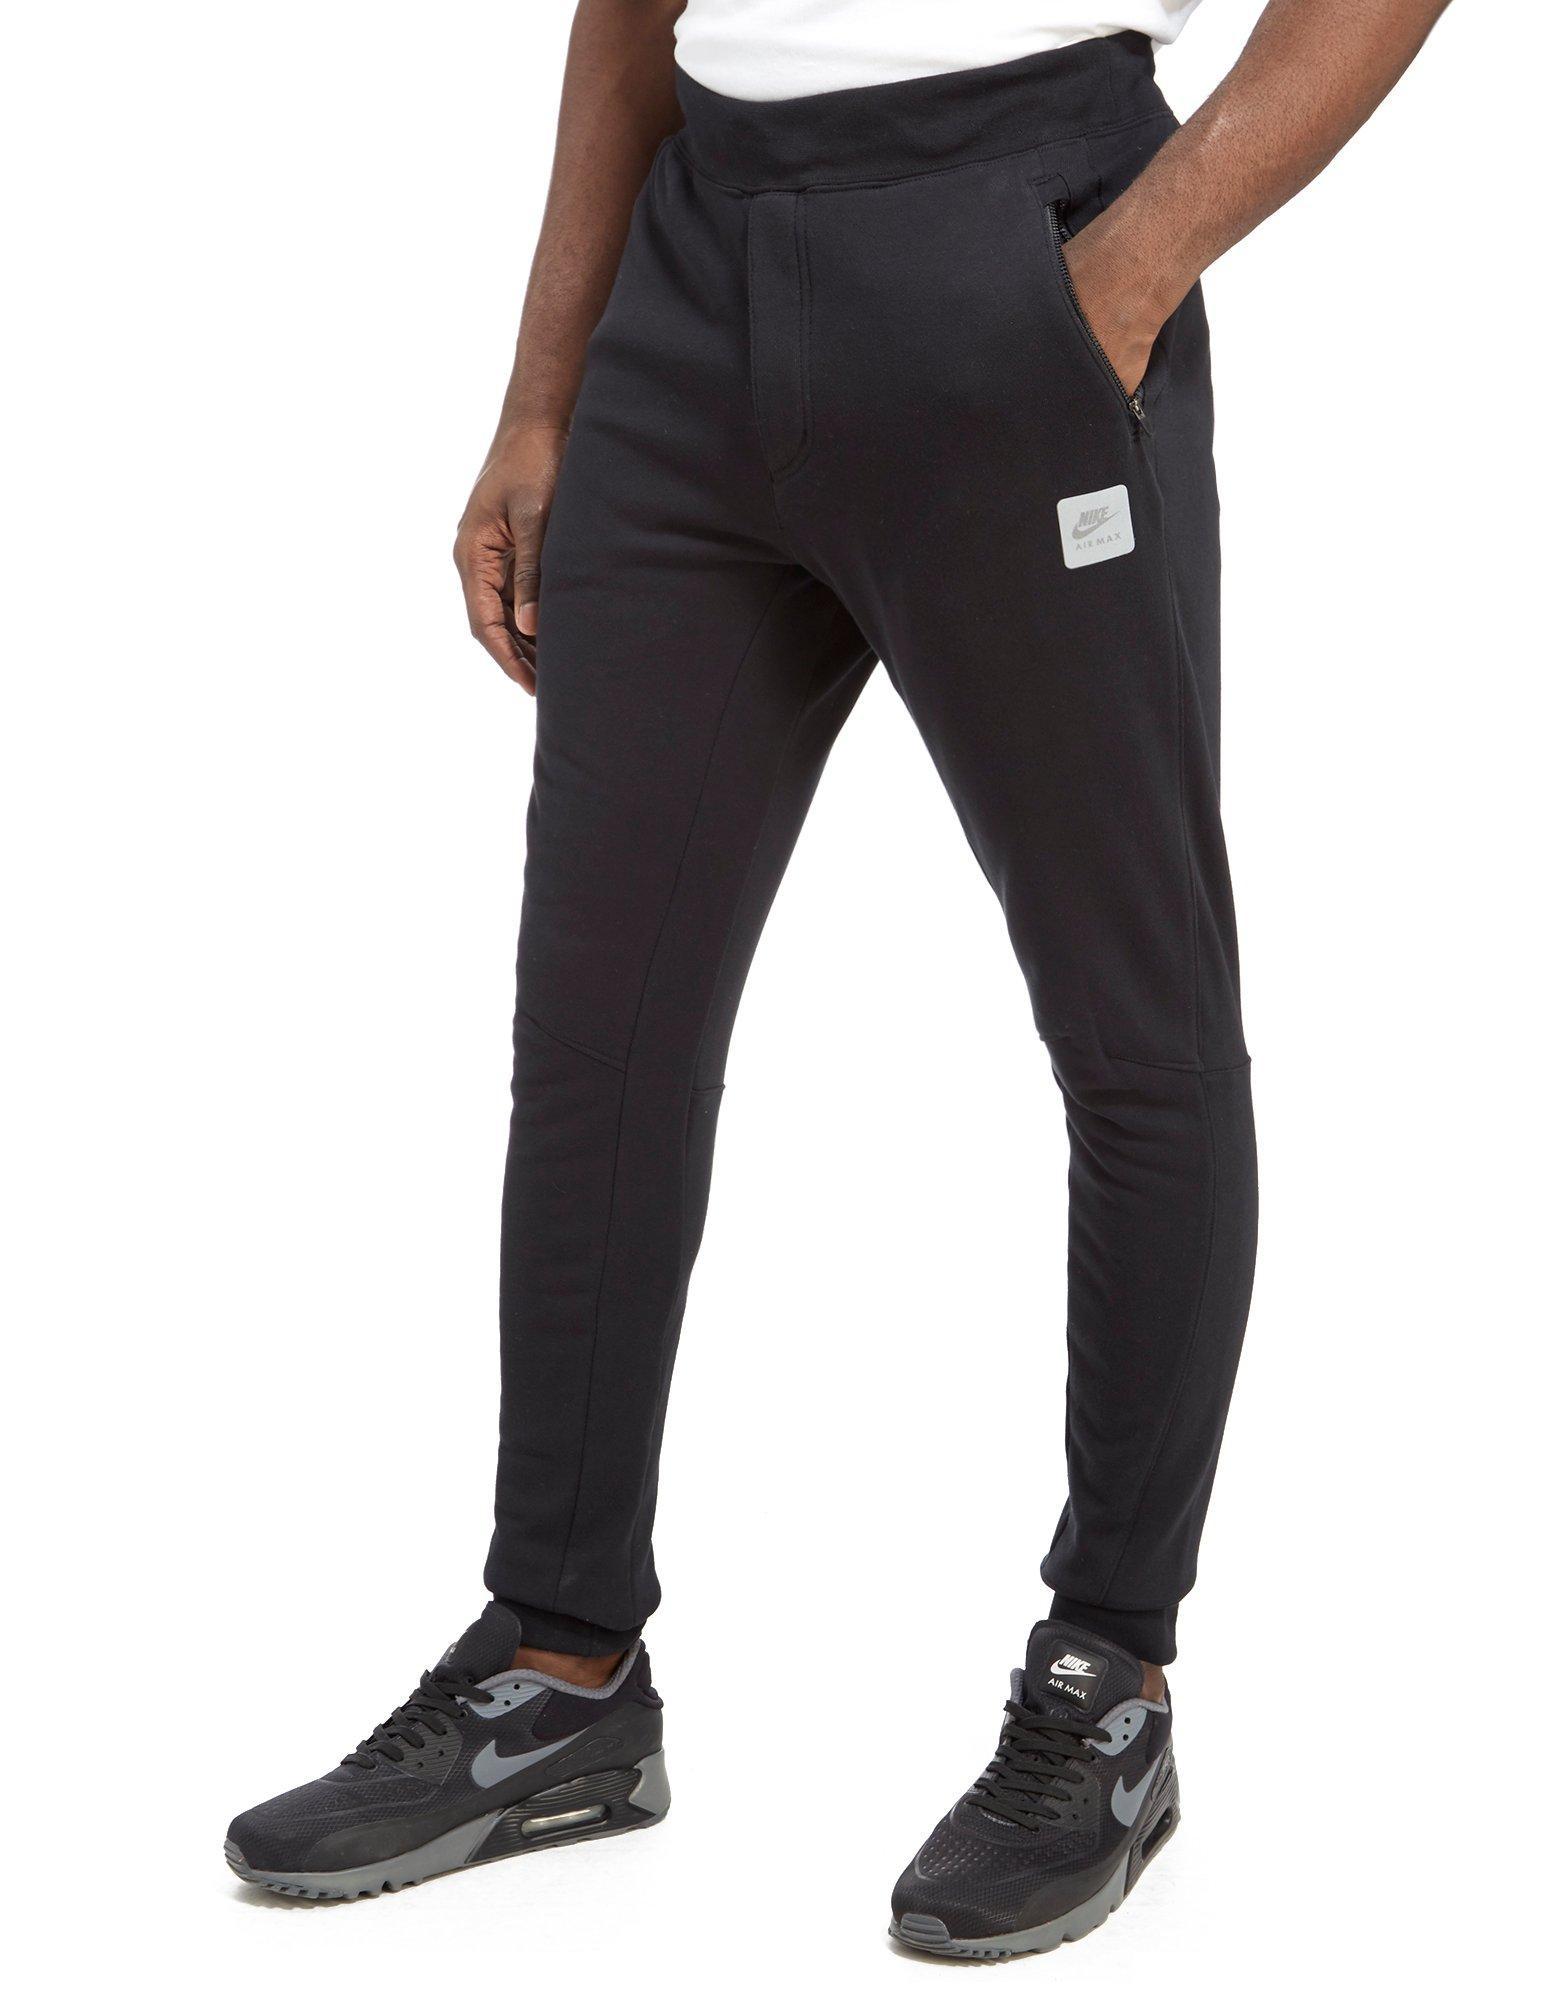 Lyst - Nike Air Max Ft Pants in Black for Men